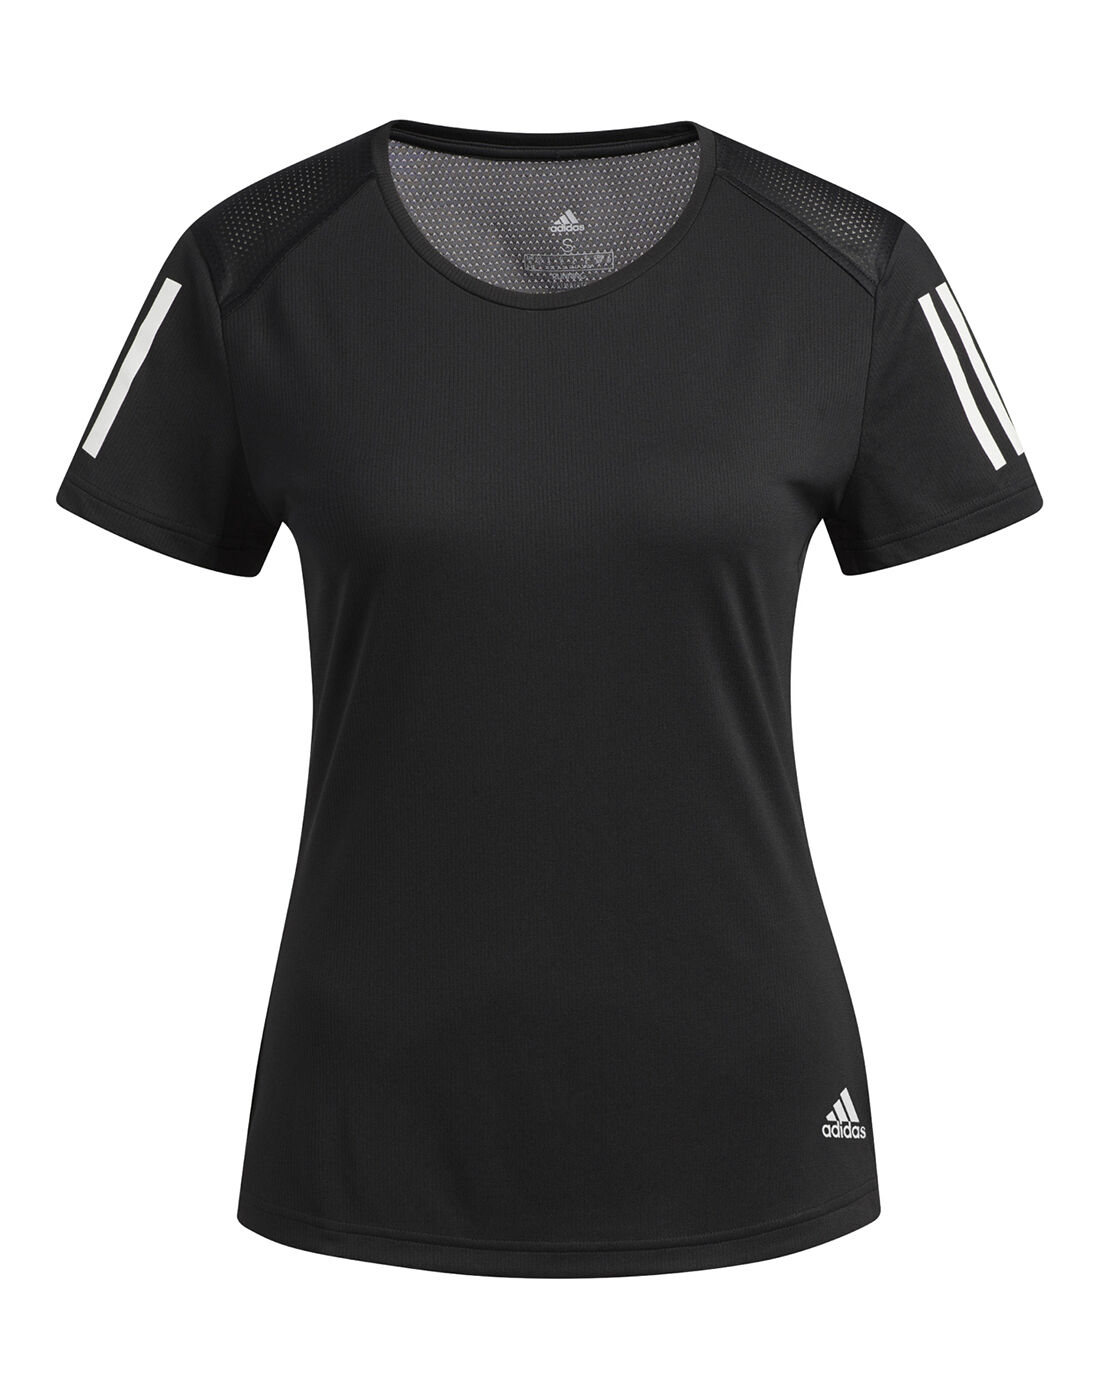 Women's Black adidas Running T-Shirt 